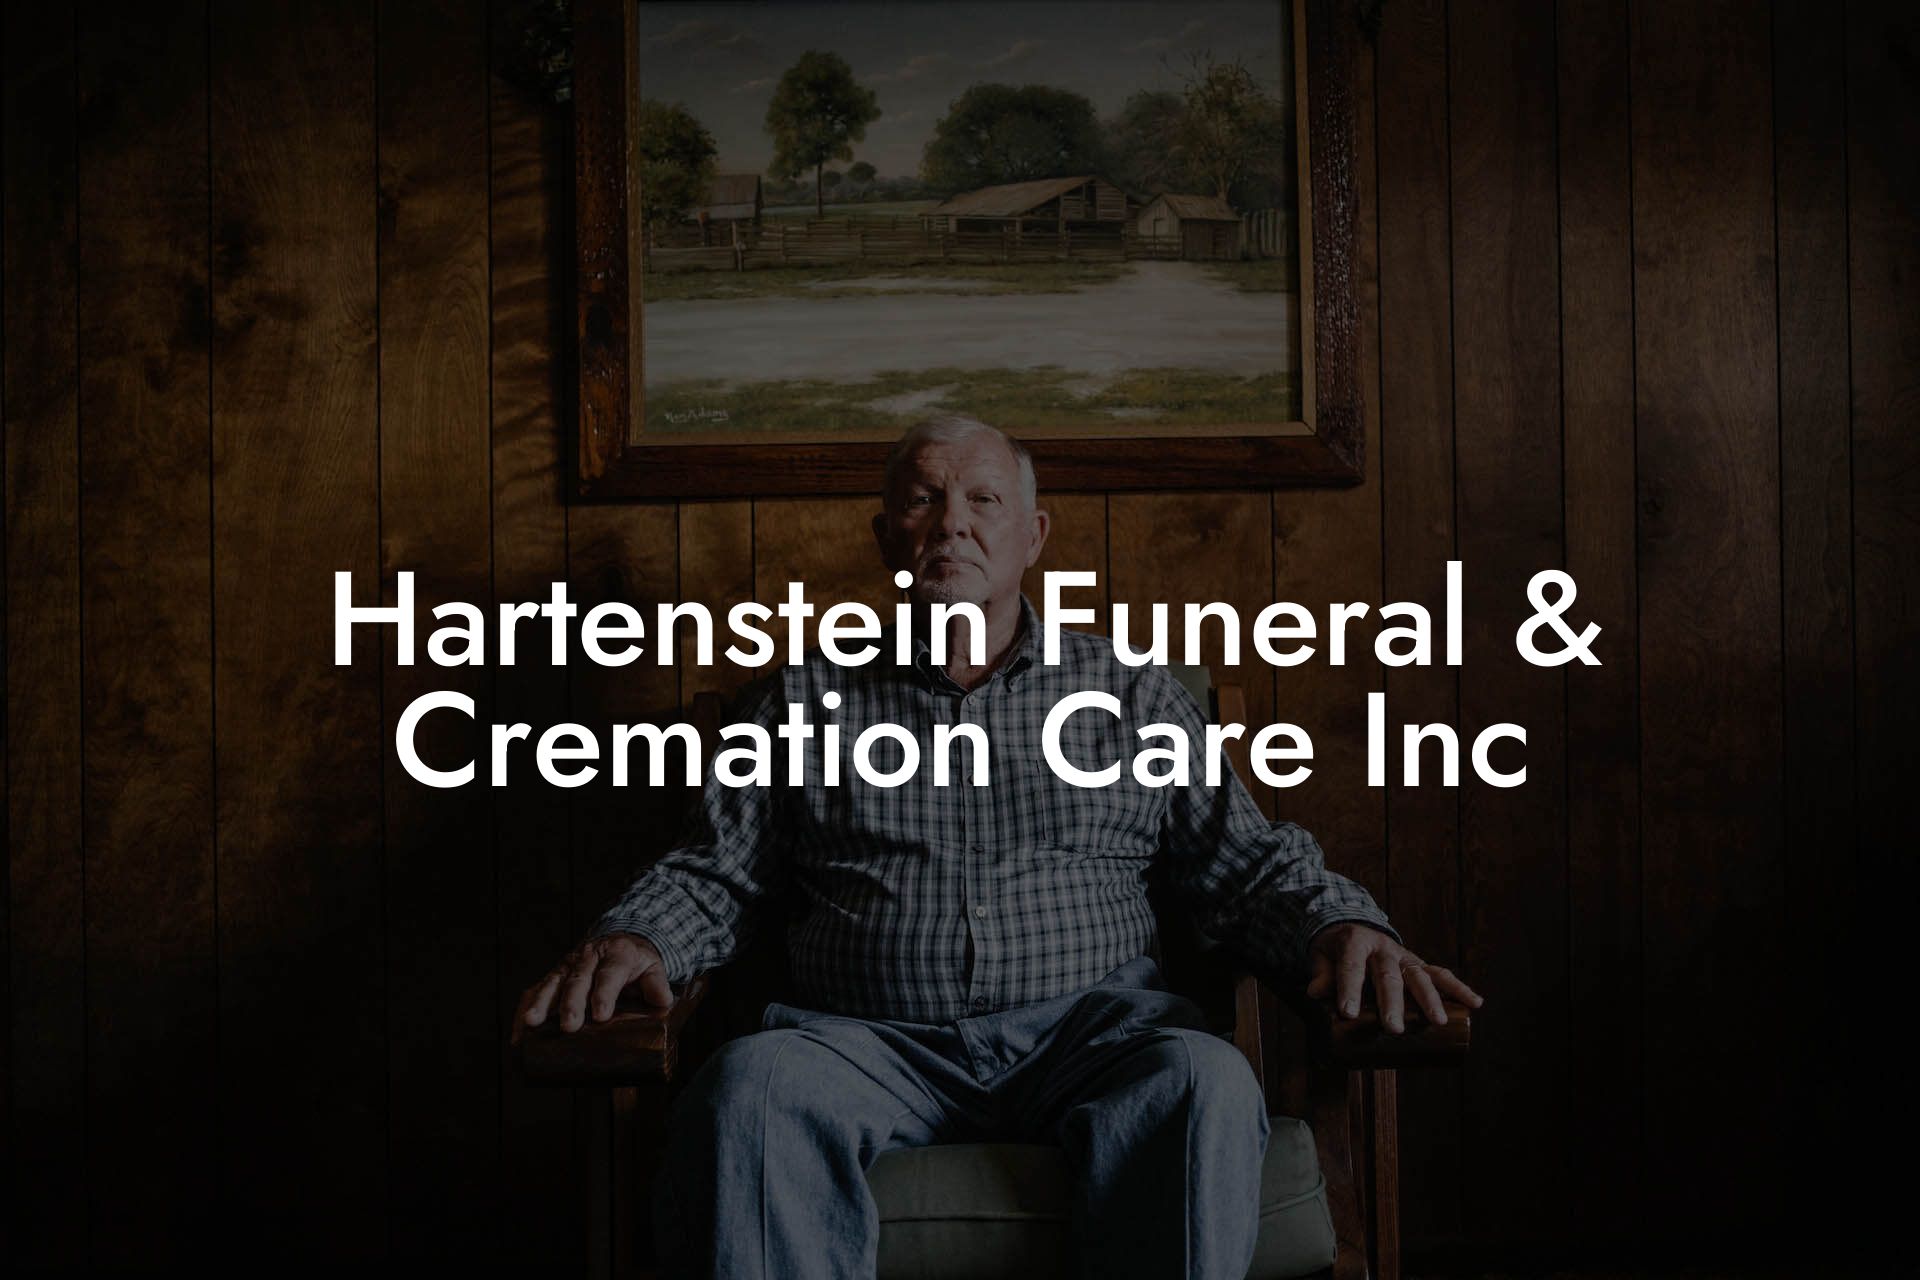 Hartenstein Funeral & Cremation Care Inc